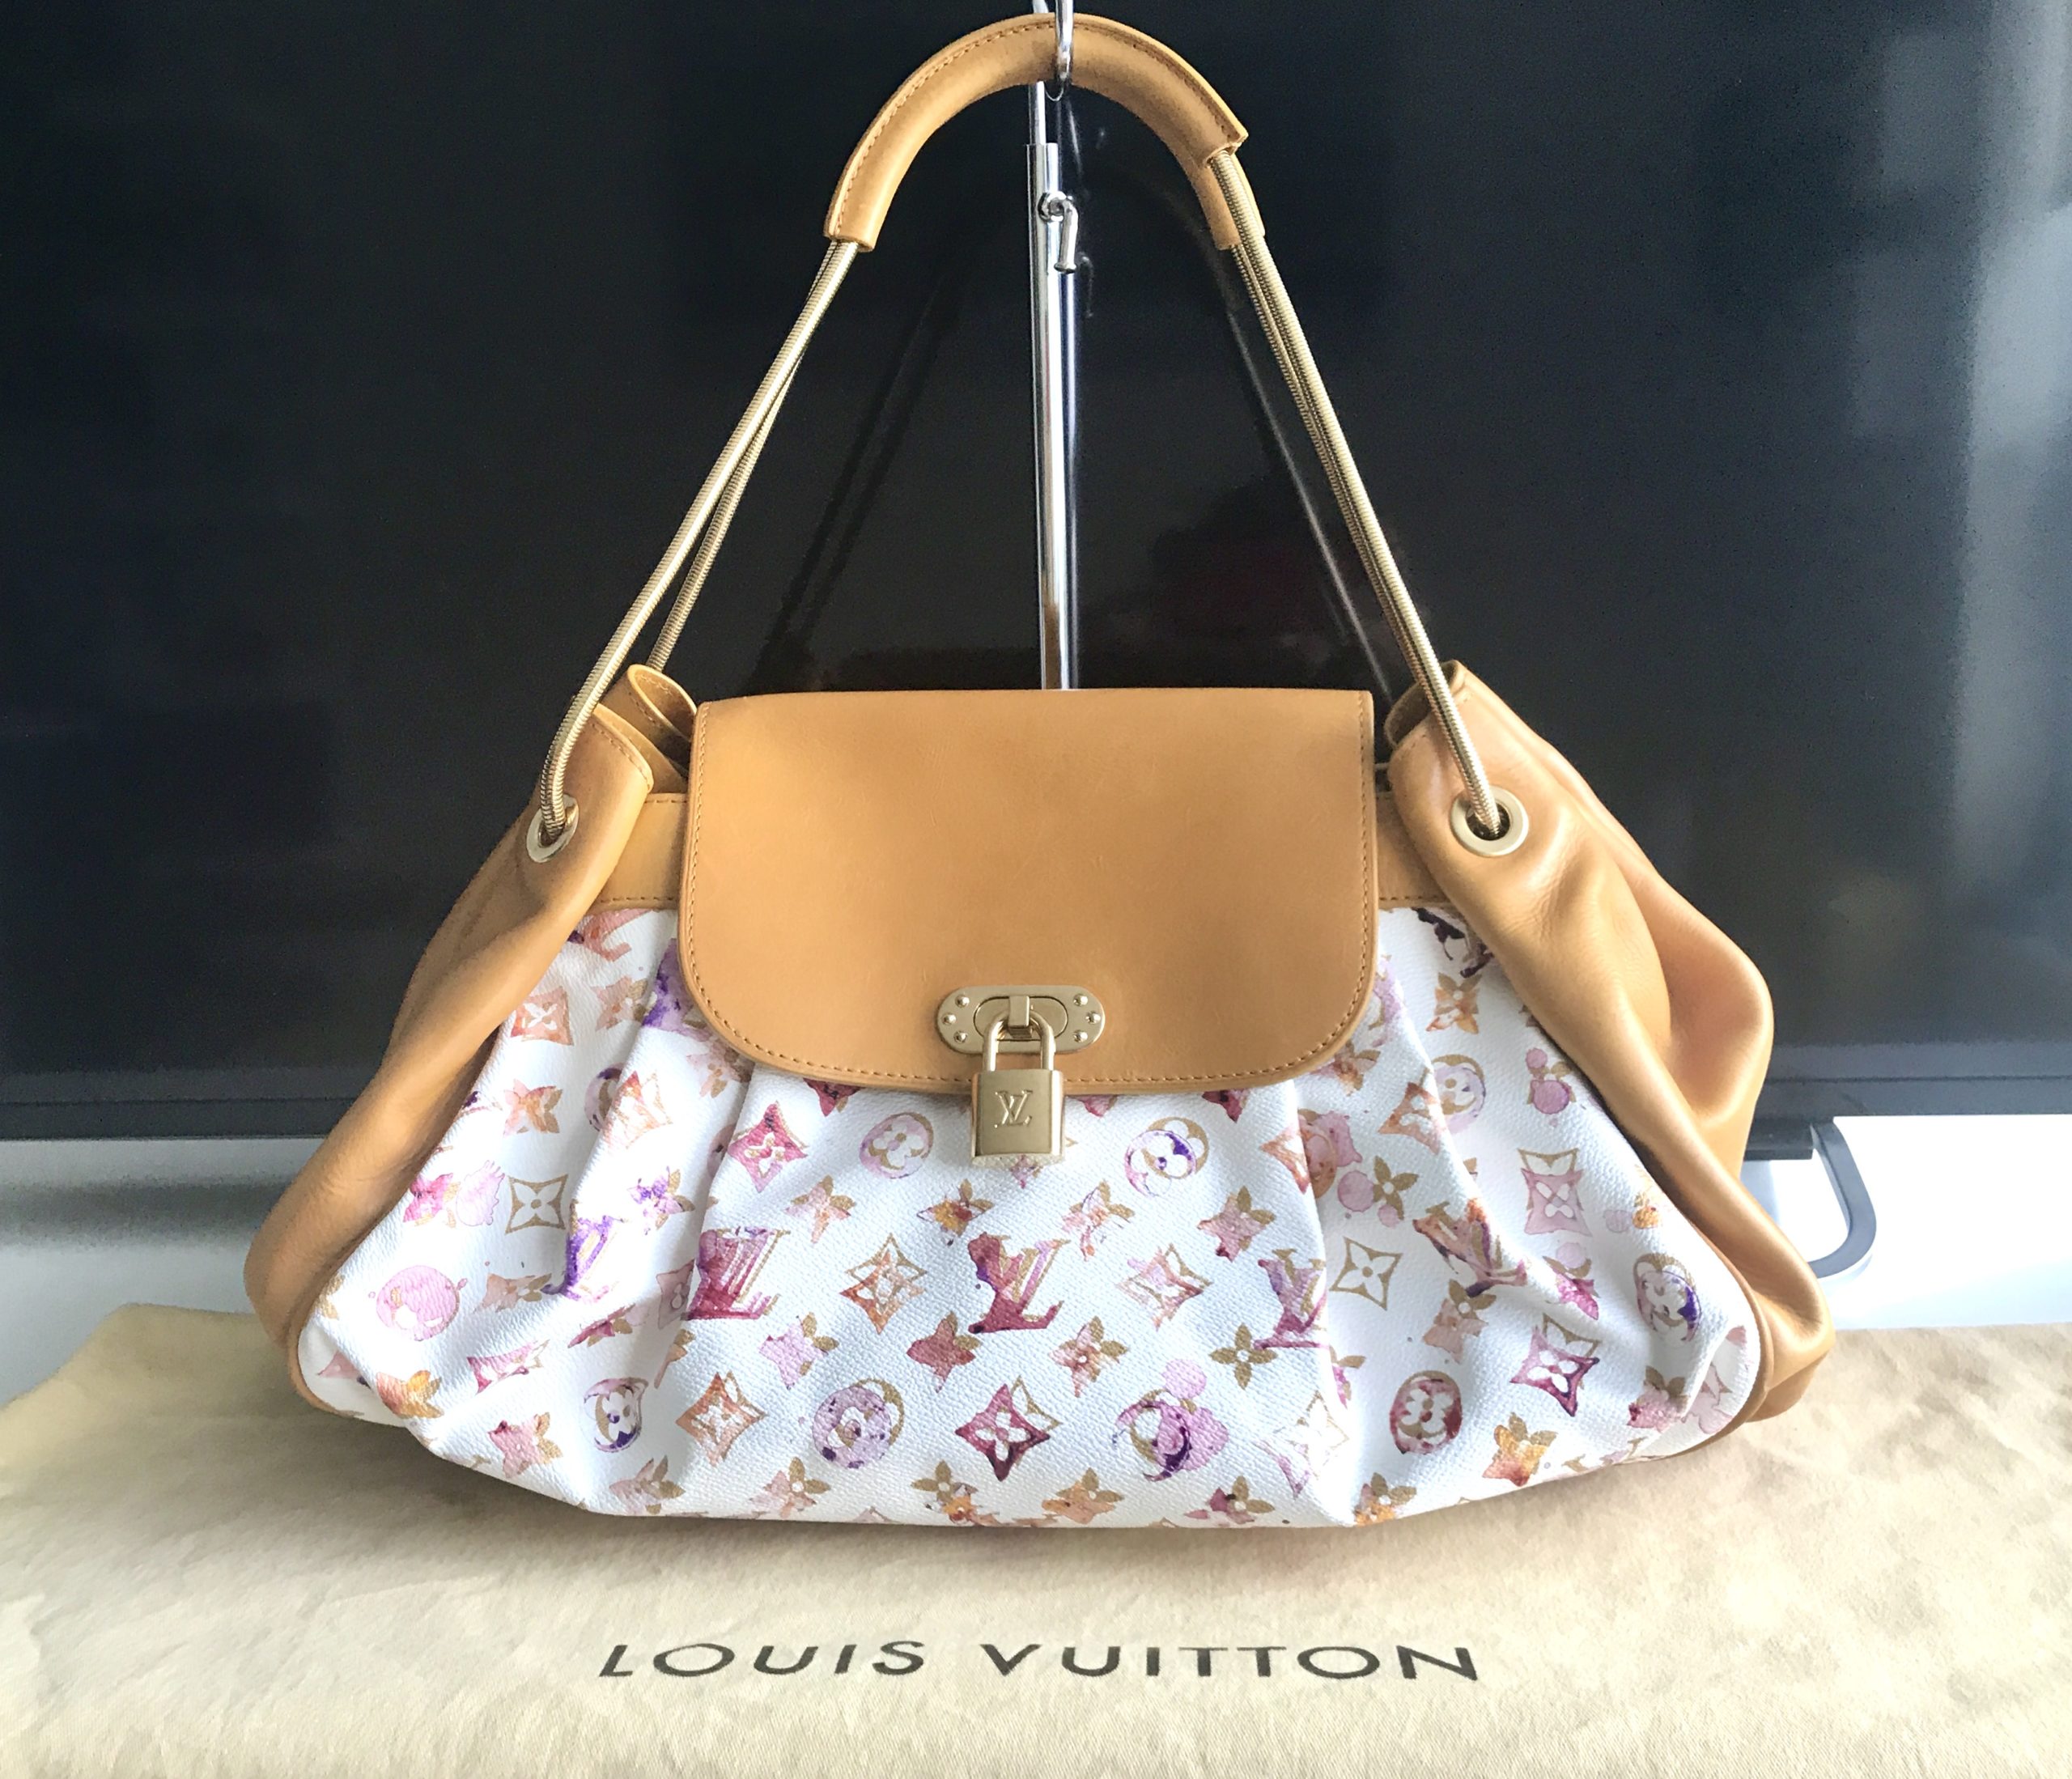 LOT:334  LOUIS VUITTON - a limited edition Richard Prince Jamais handbag.